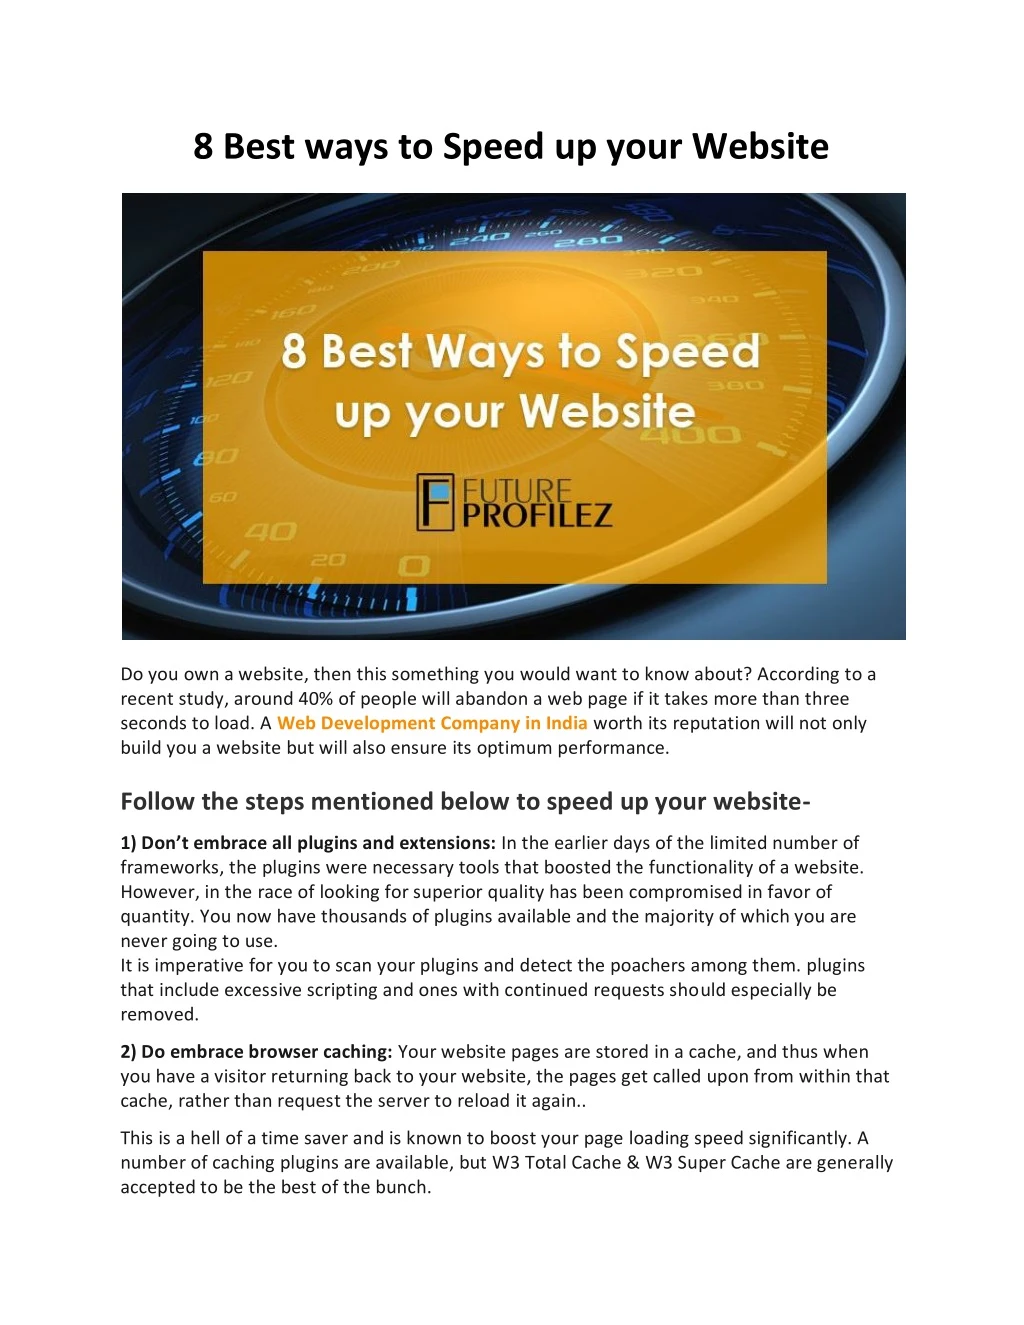 8 best ways to speed up your website